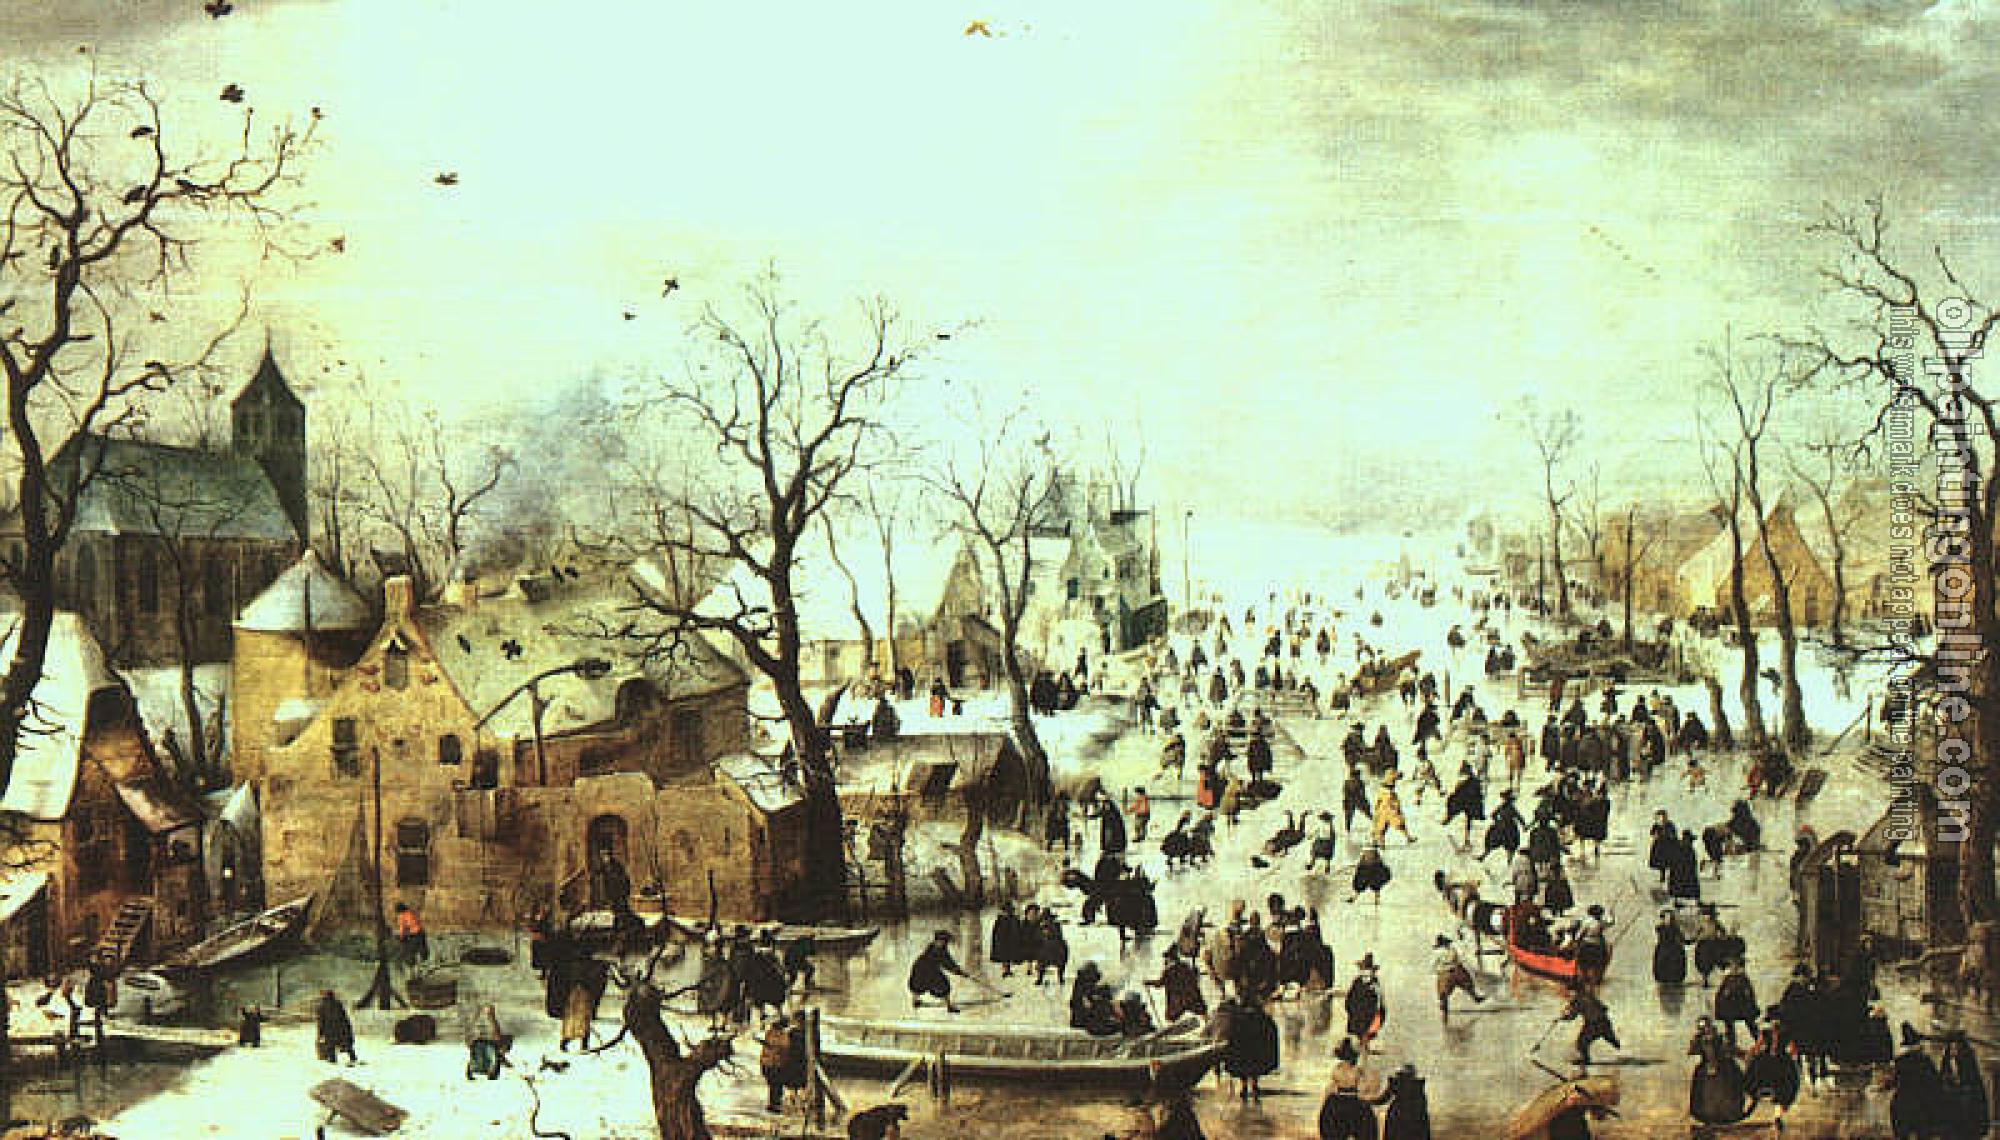 Avercamp, Hendrick - Graphic Winter Landscape